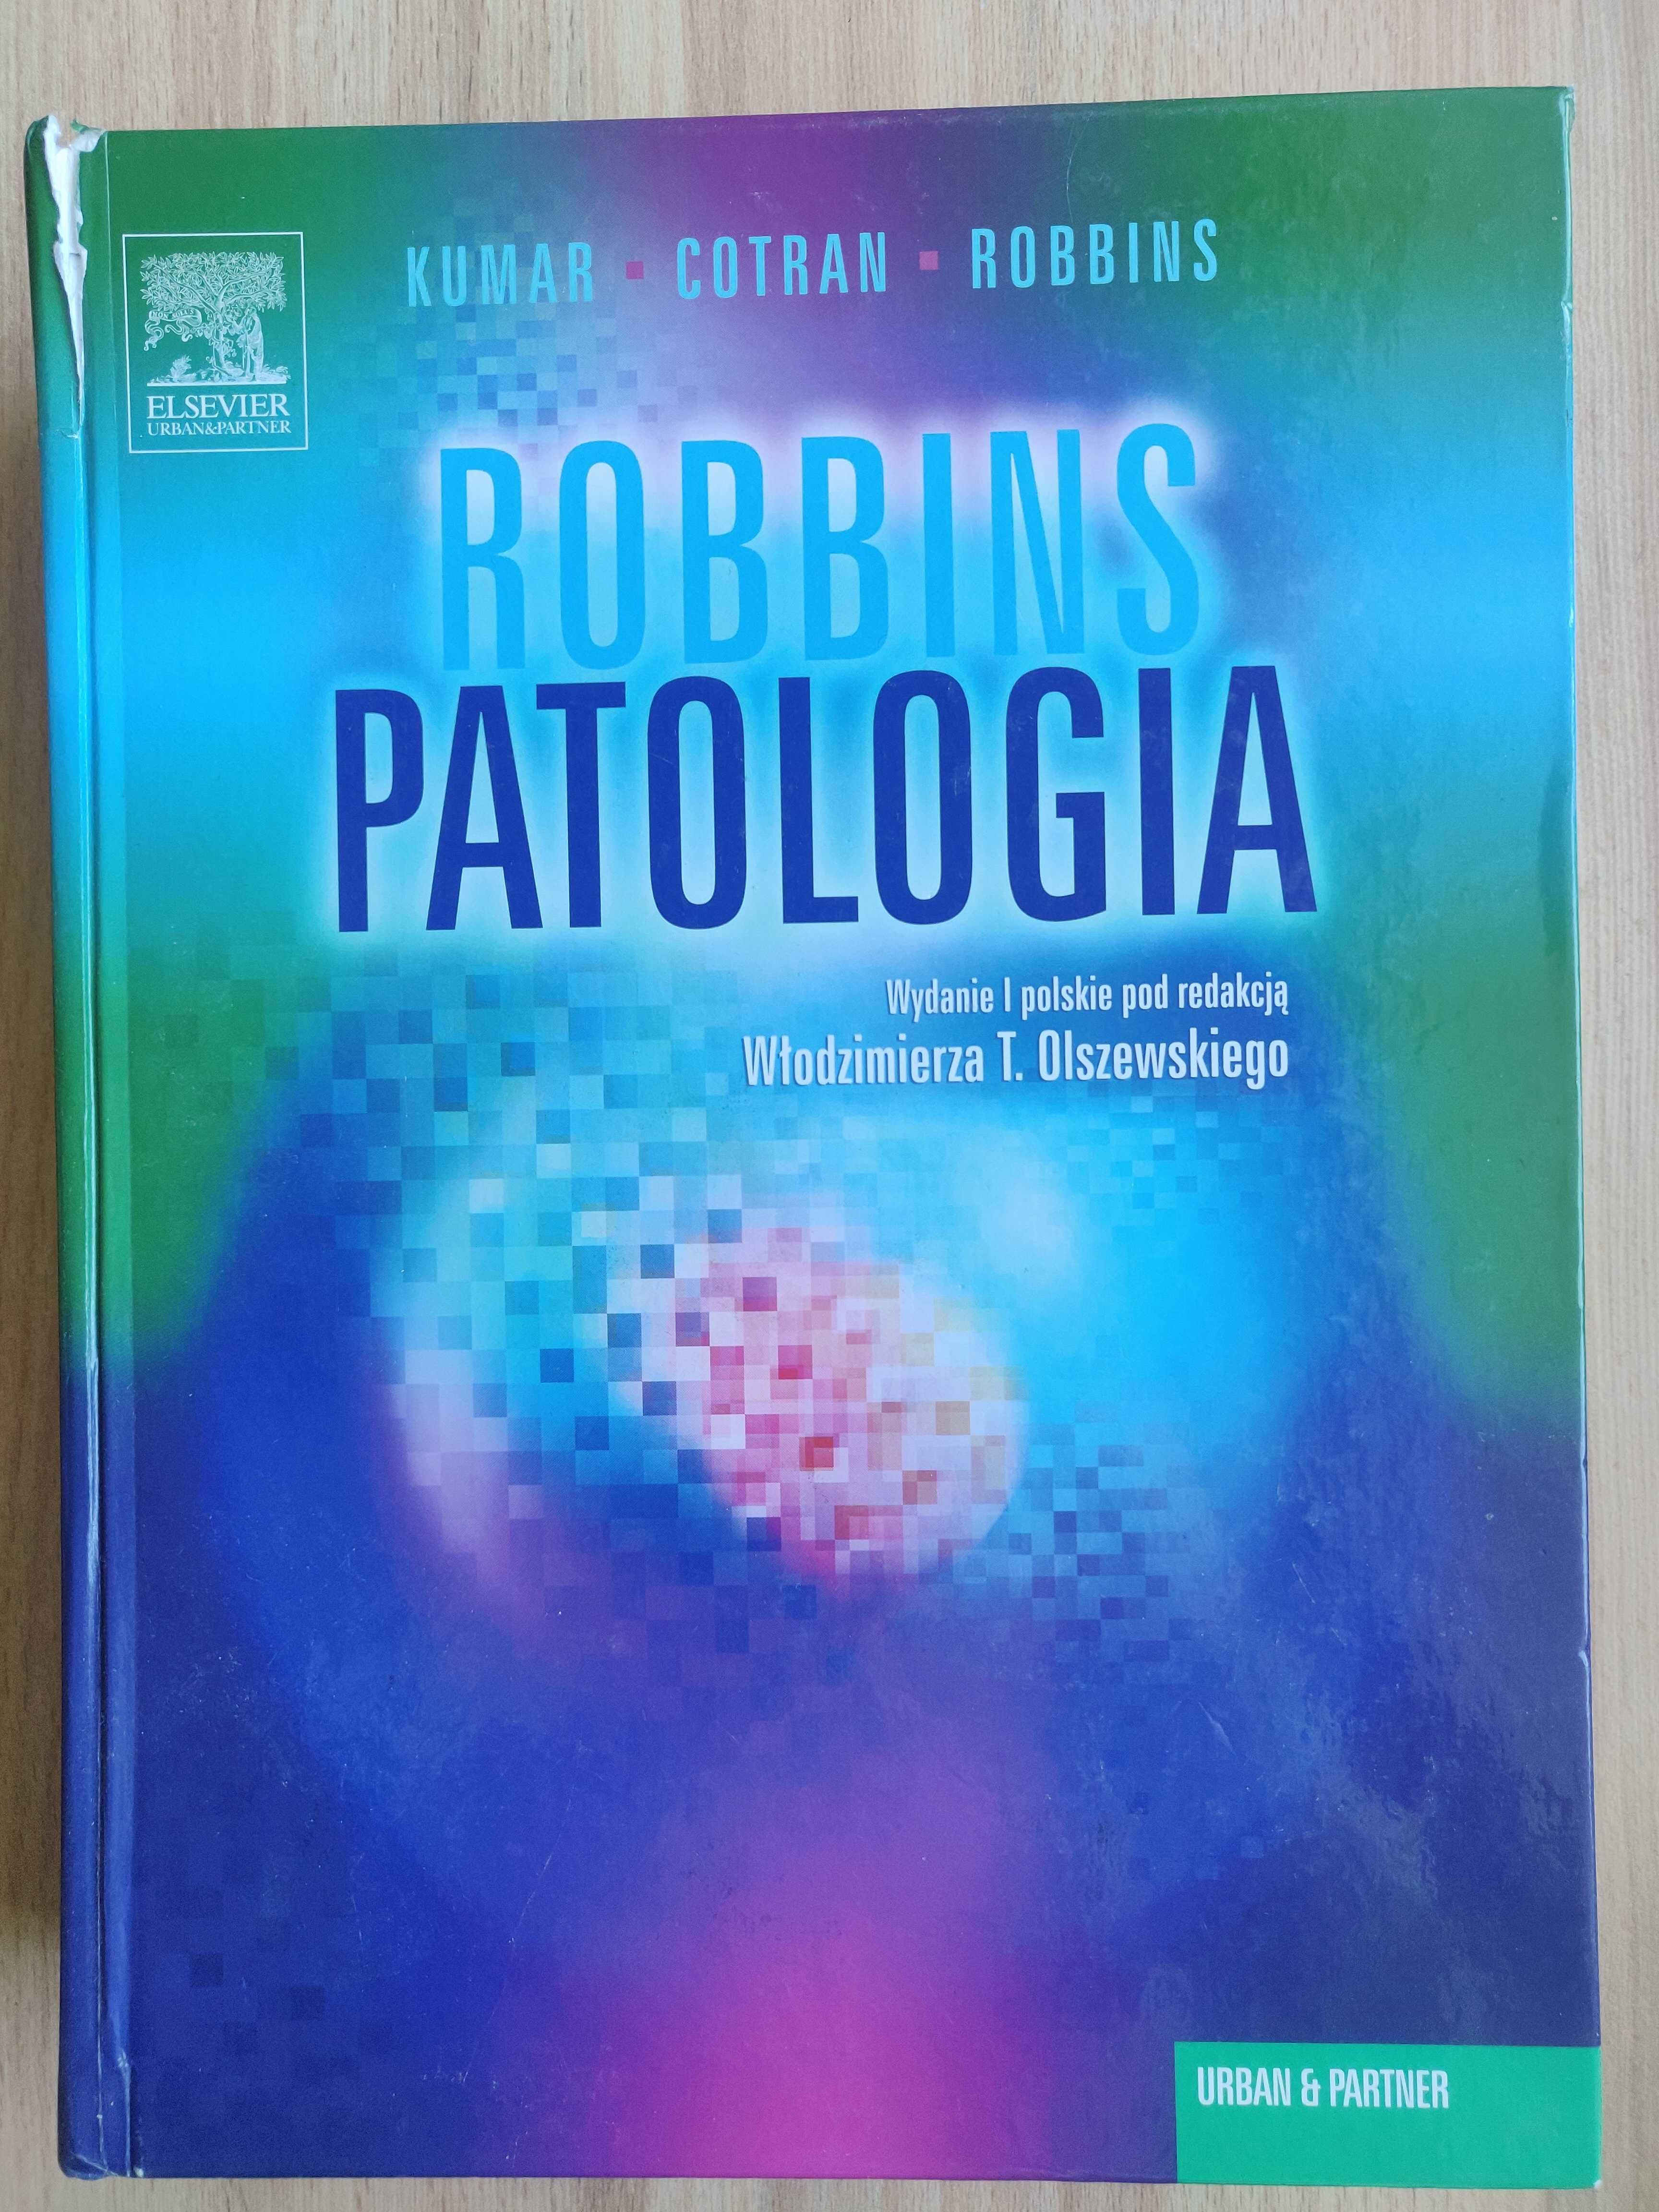 Książka: Robins Patologia 2003, wyd. Urban & Partner